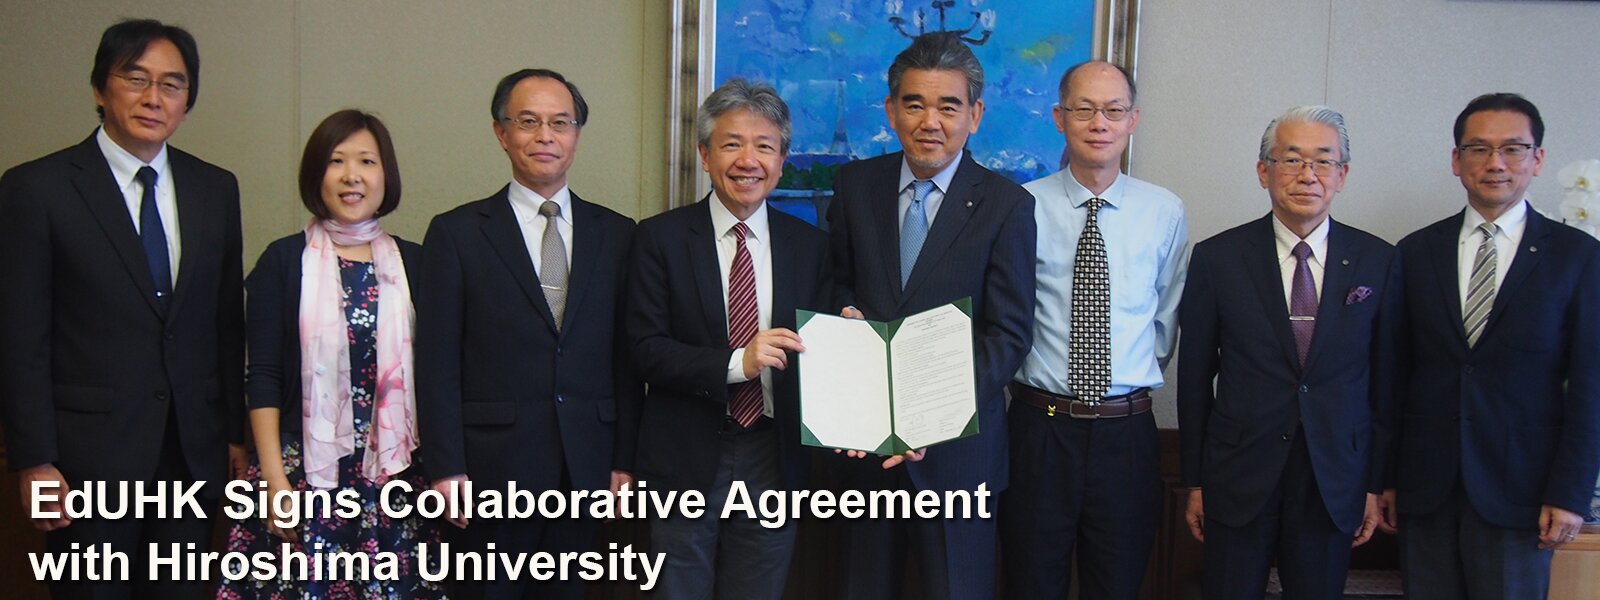 EdUHK Signs Collaborative Agreement with Hiroshima University